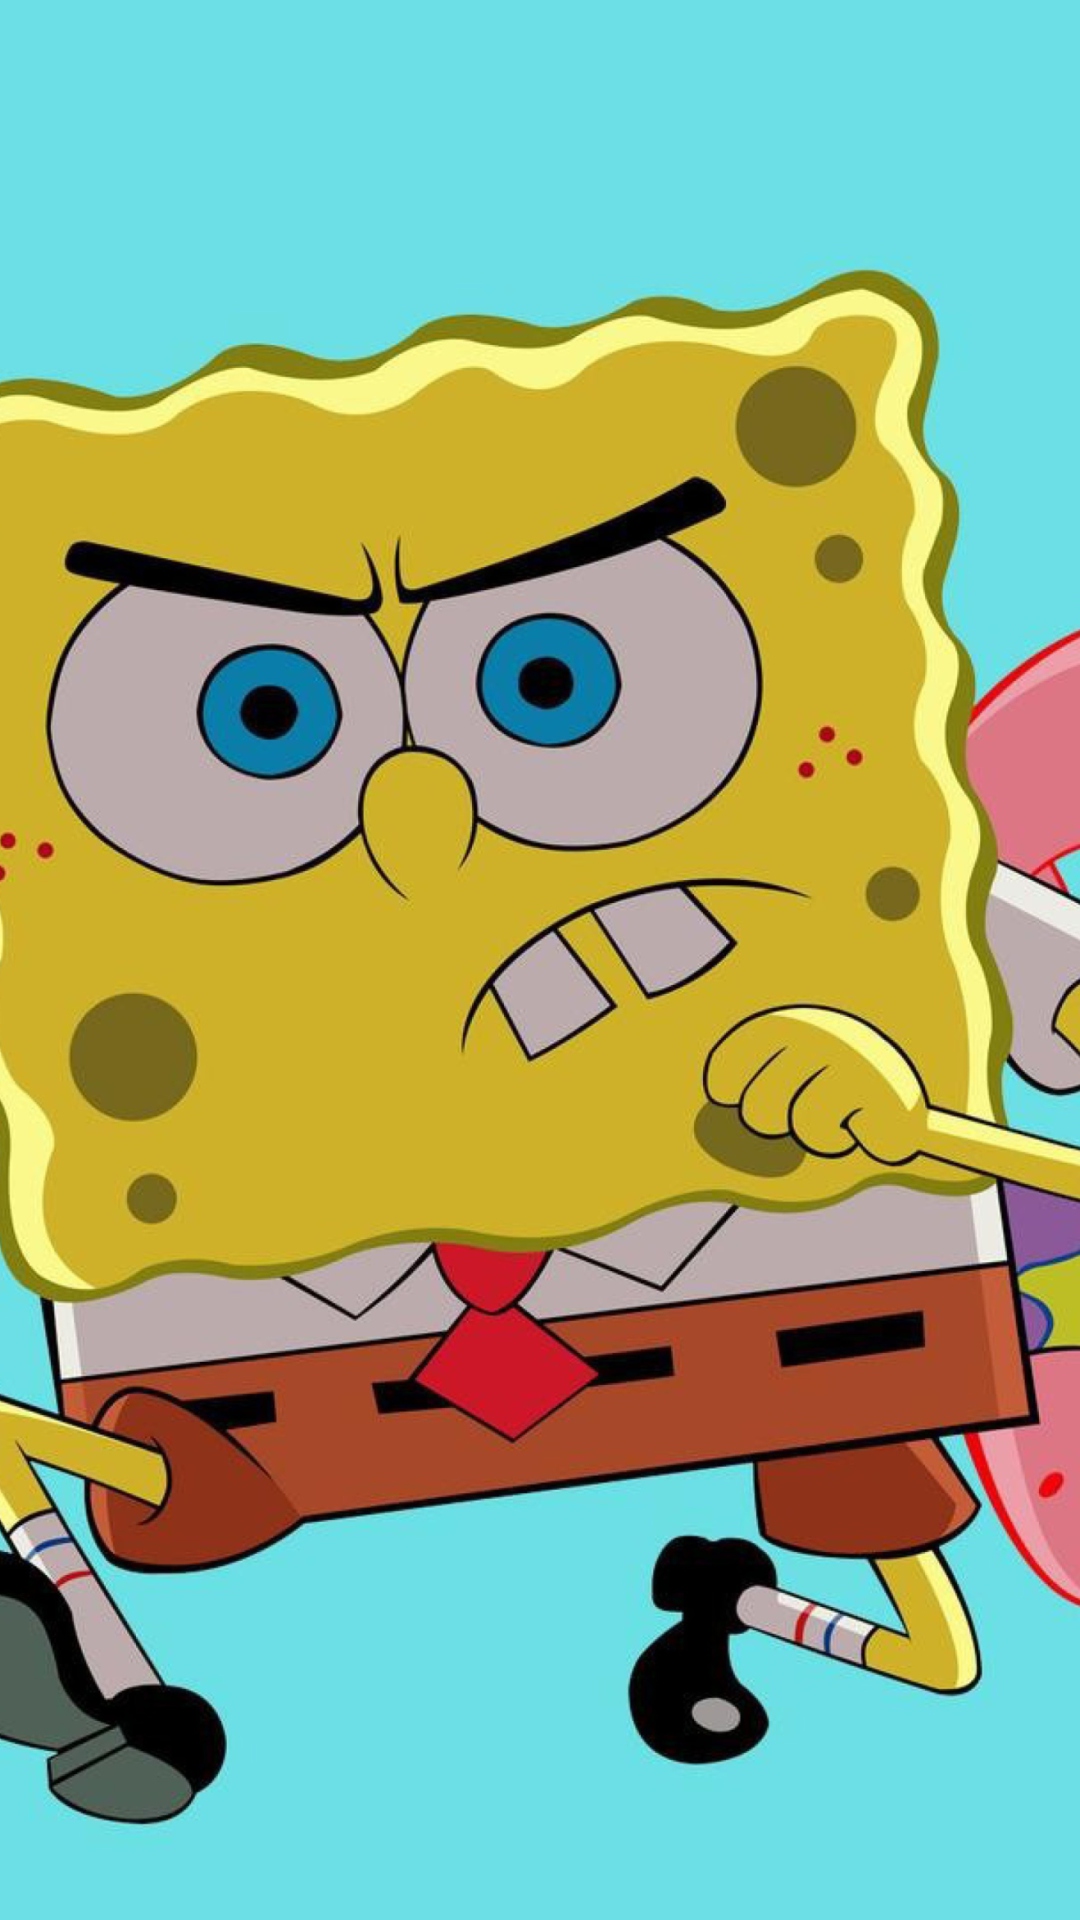 Grumpy Spongebob wallpaper 1080x1920